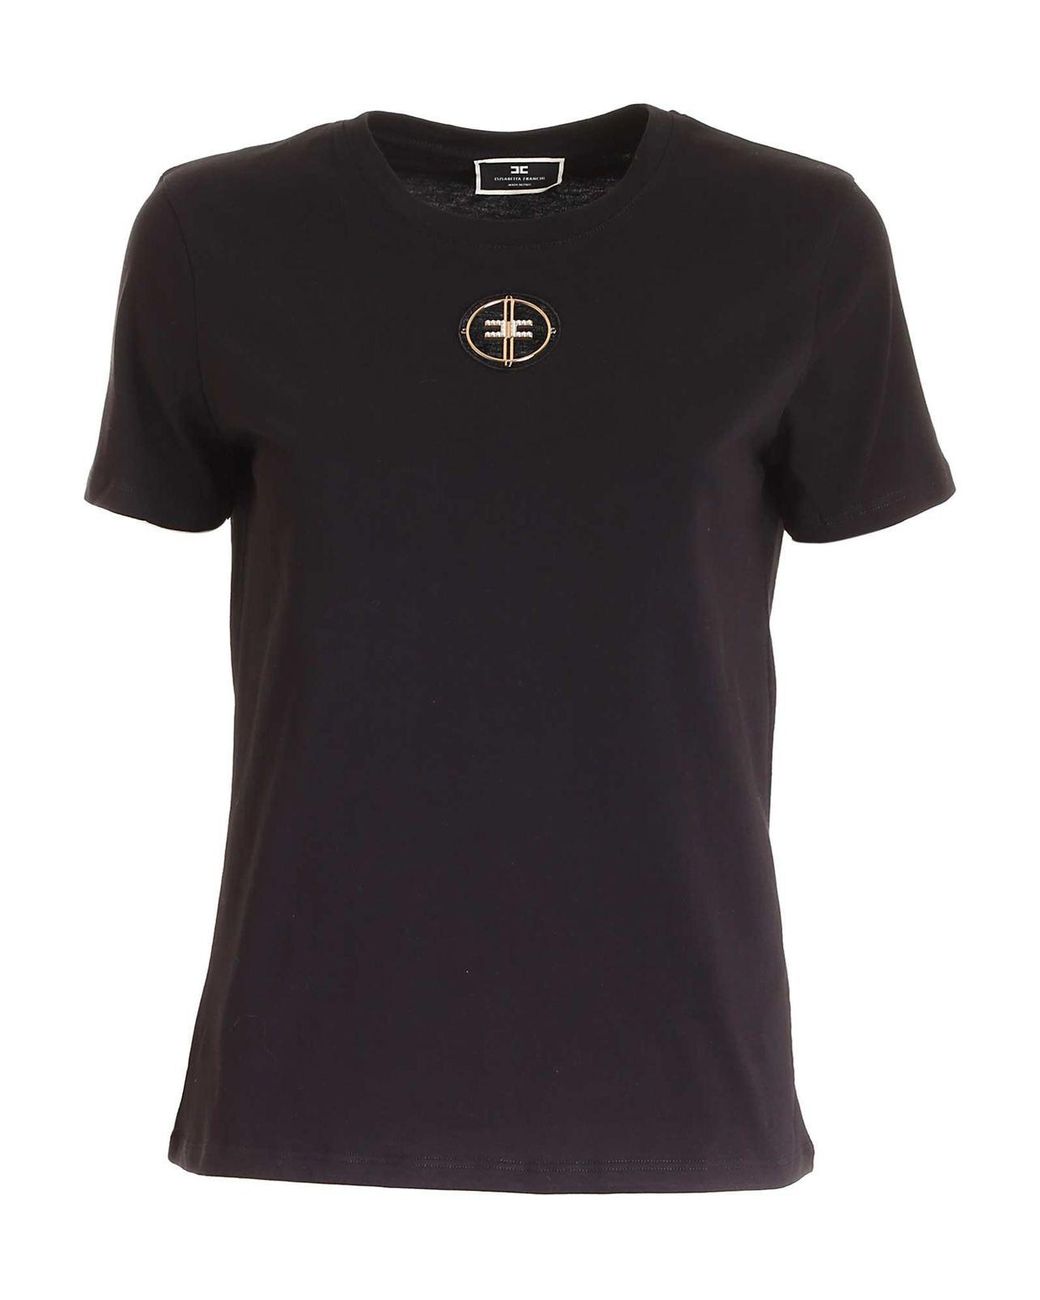 Elisabetta Franchi Charm Cotton T-shirt in Black - Lyst